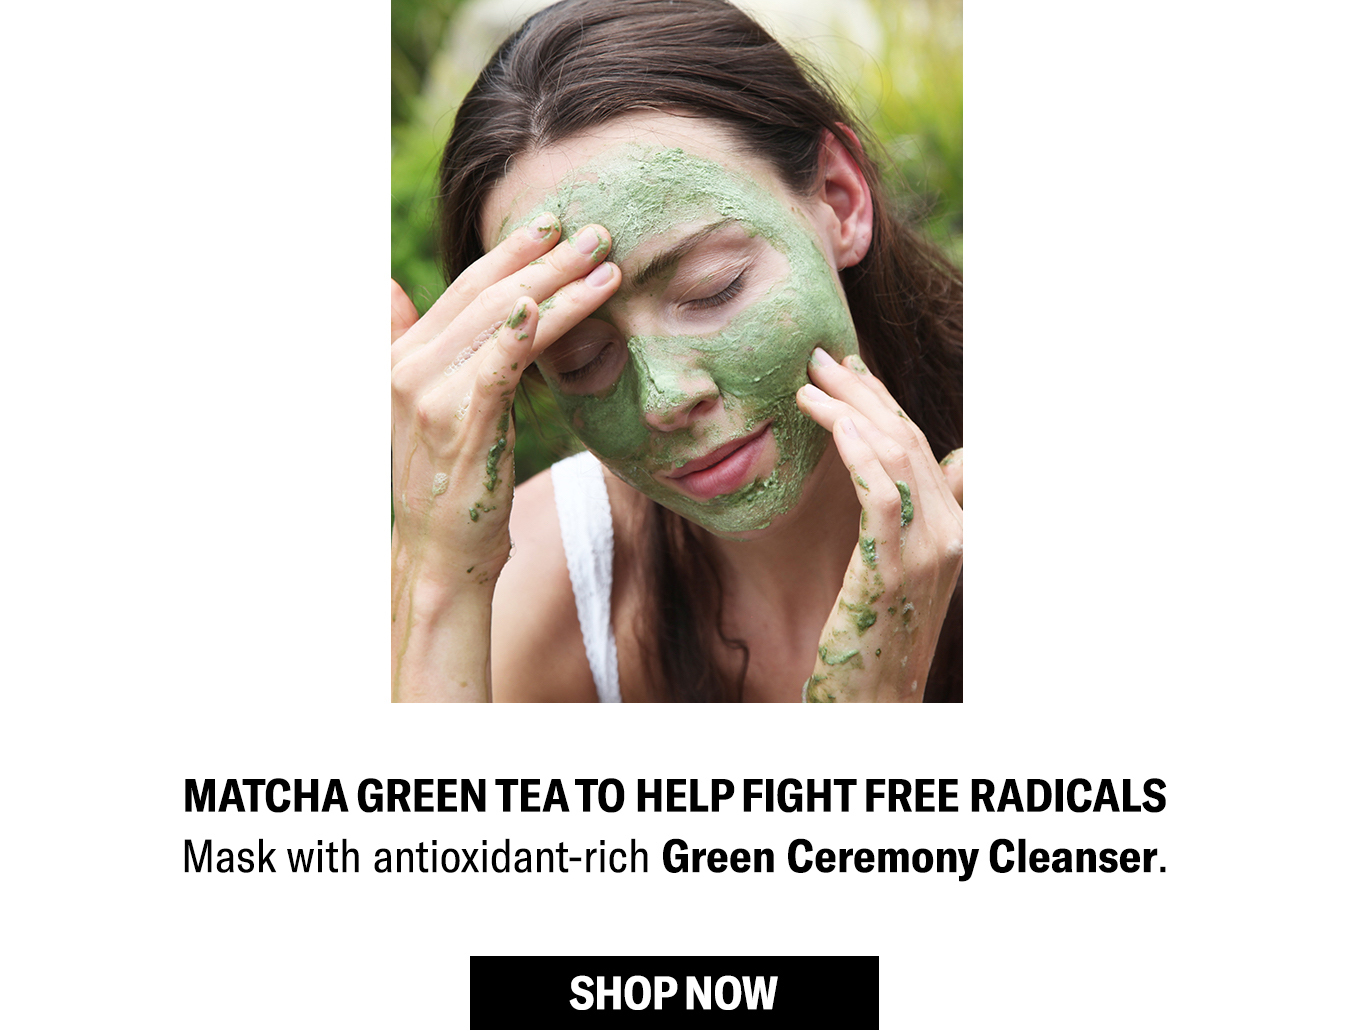 Matcha Green Tea to help fight free radicals.